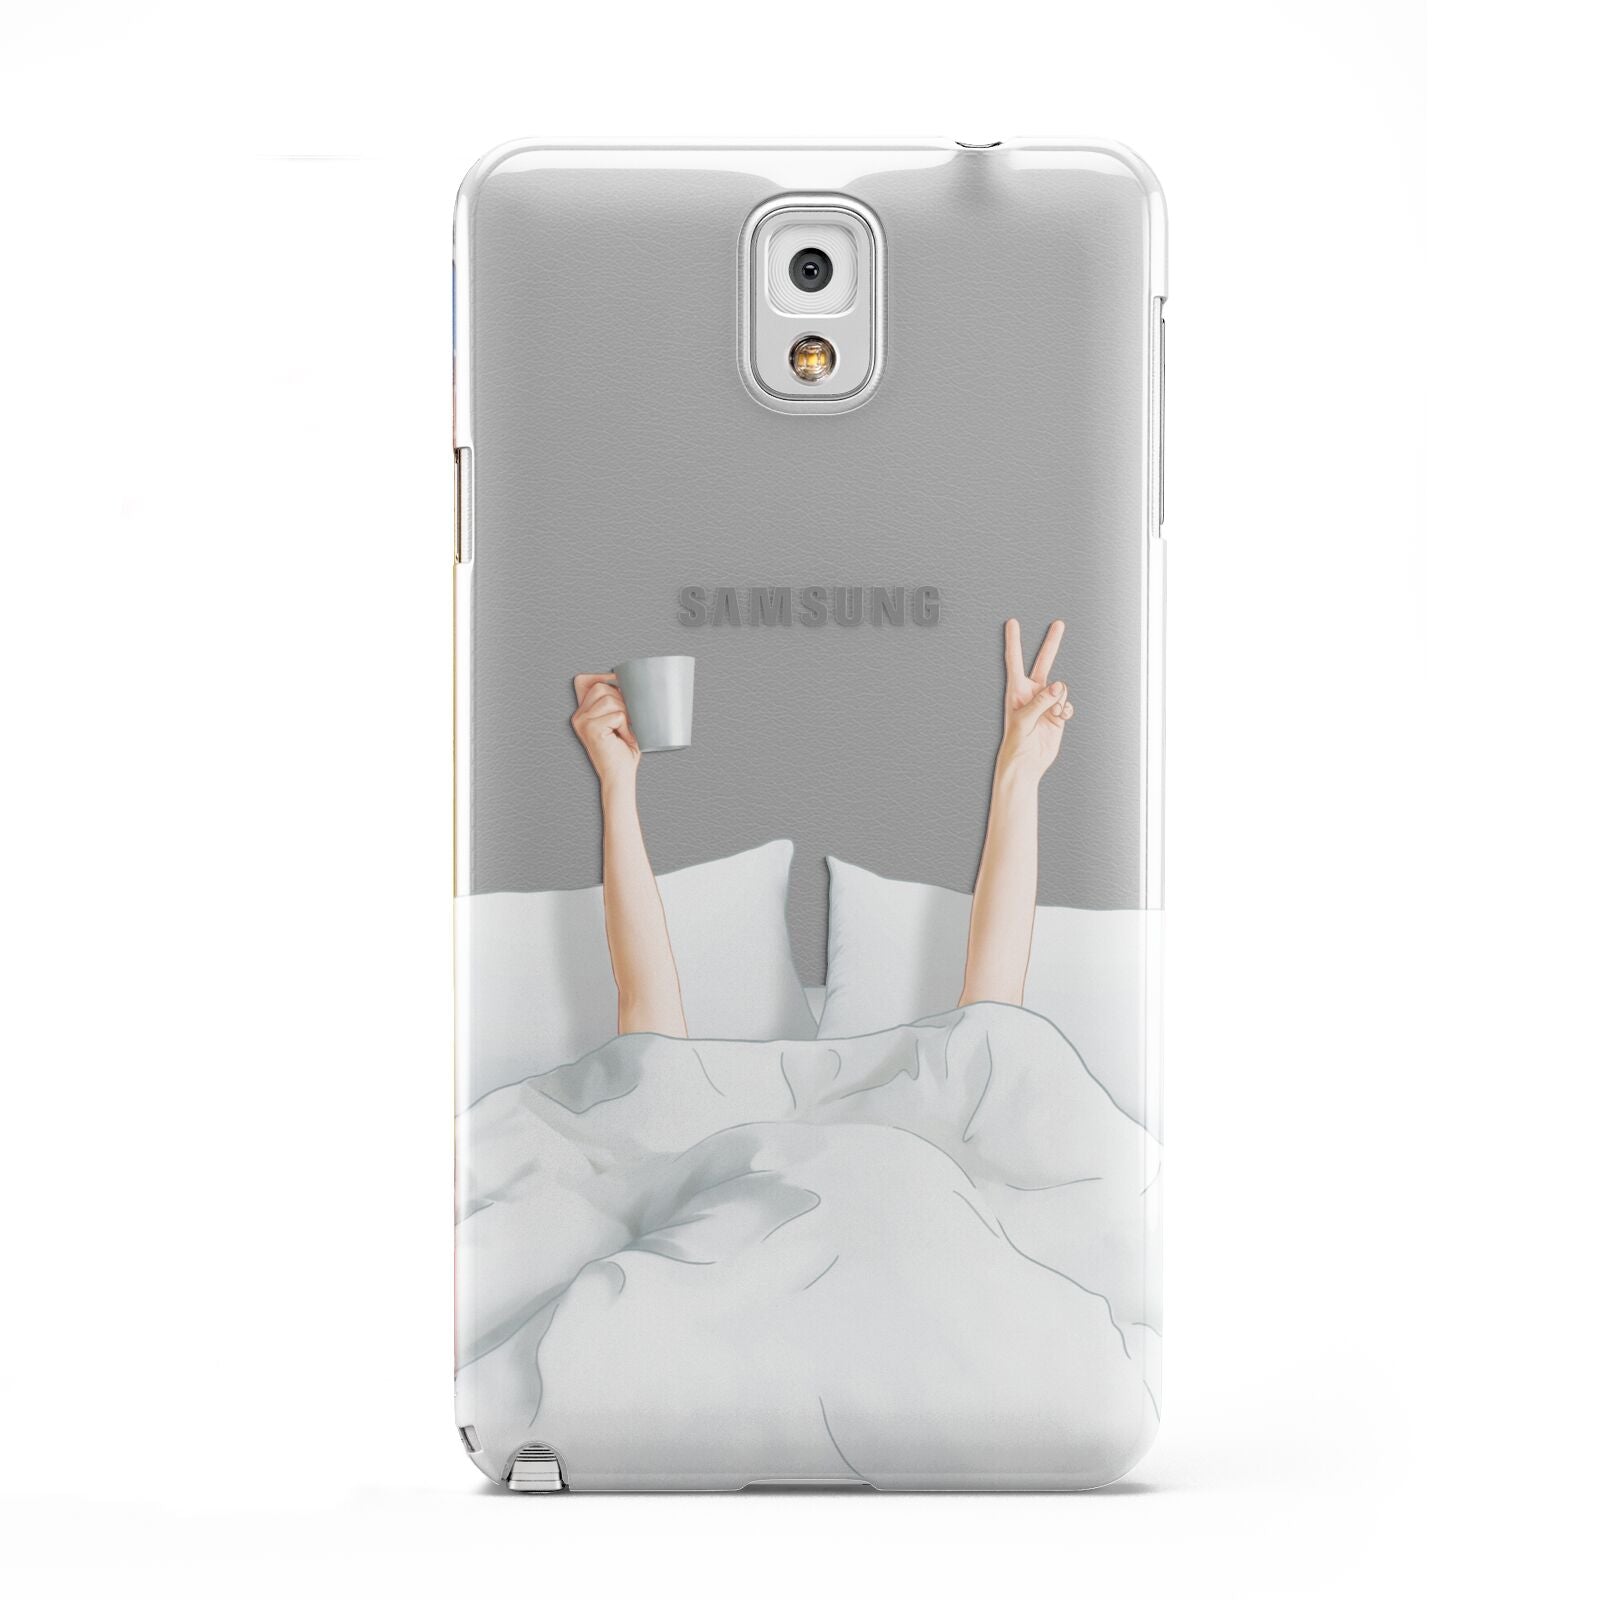 Morning Coffee Samsung Galaxy Note 3 Case